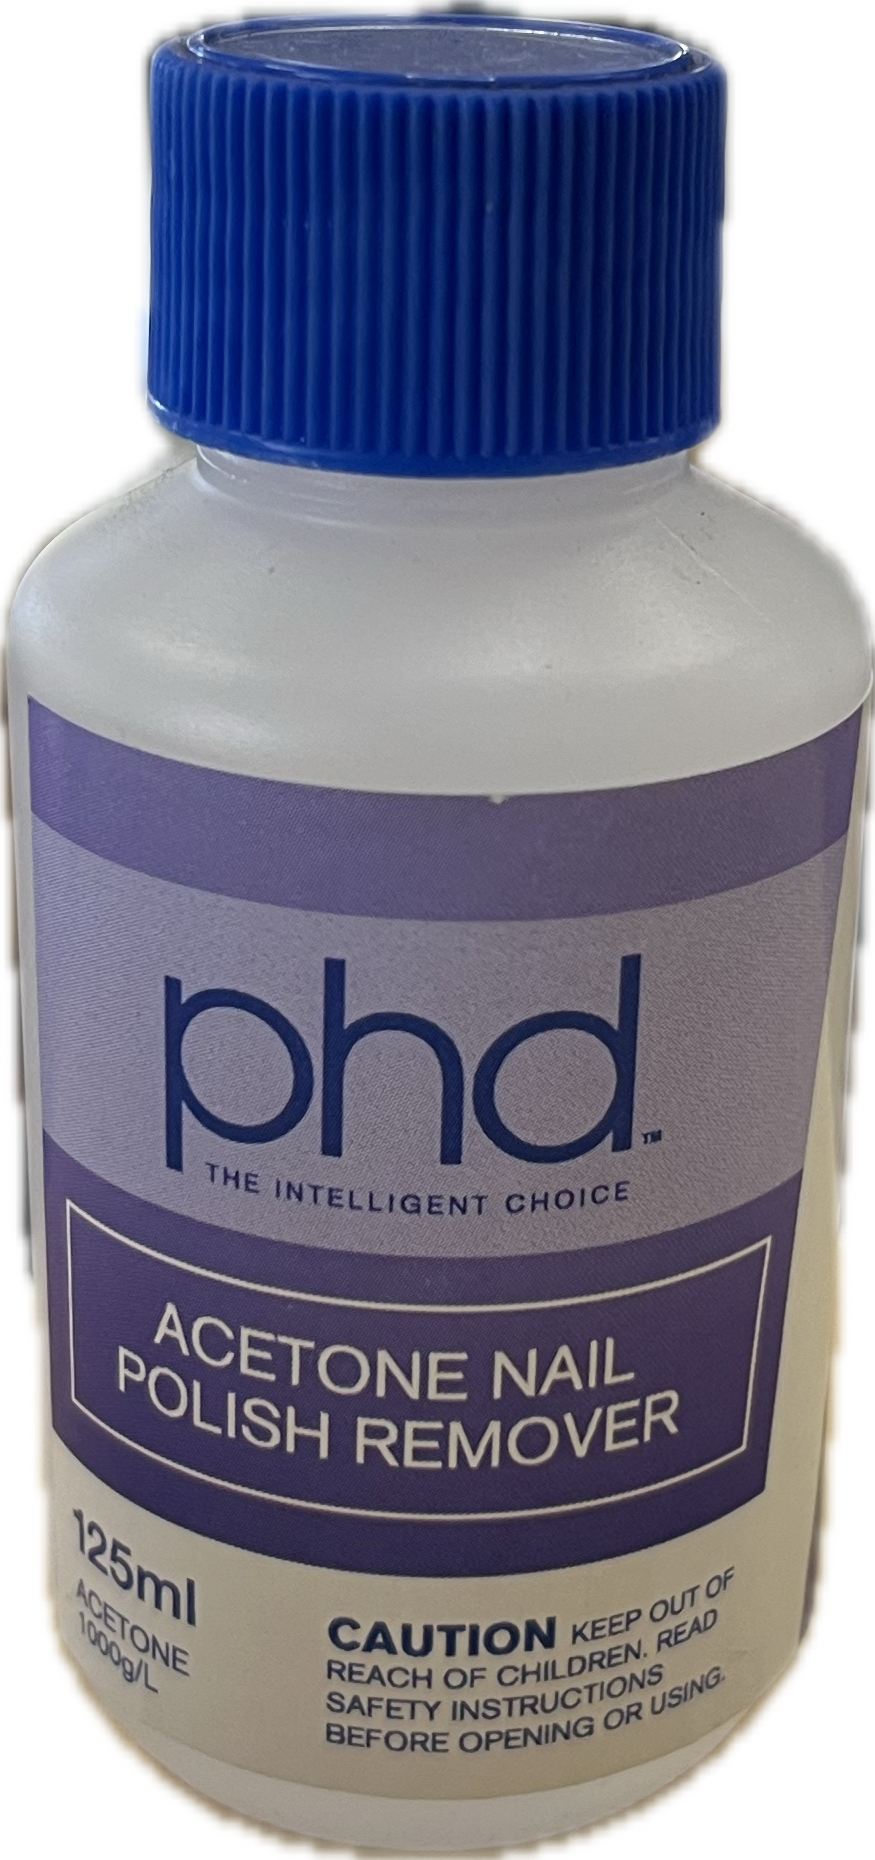 Acetone nail polish remover 125ml